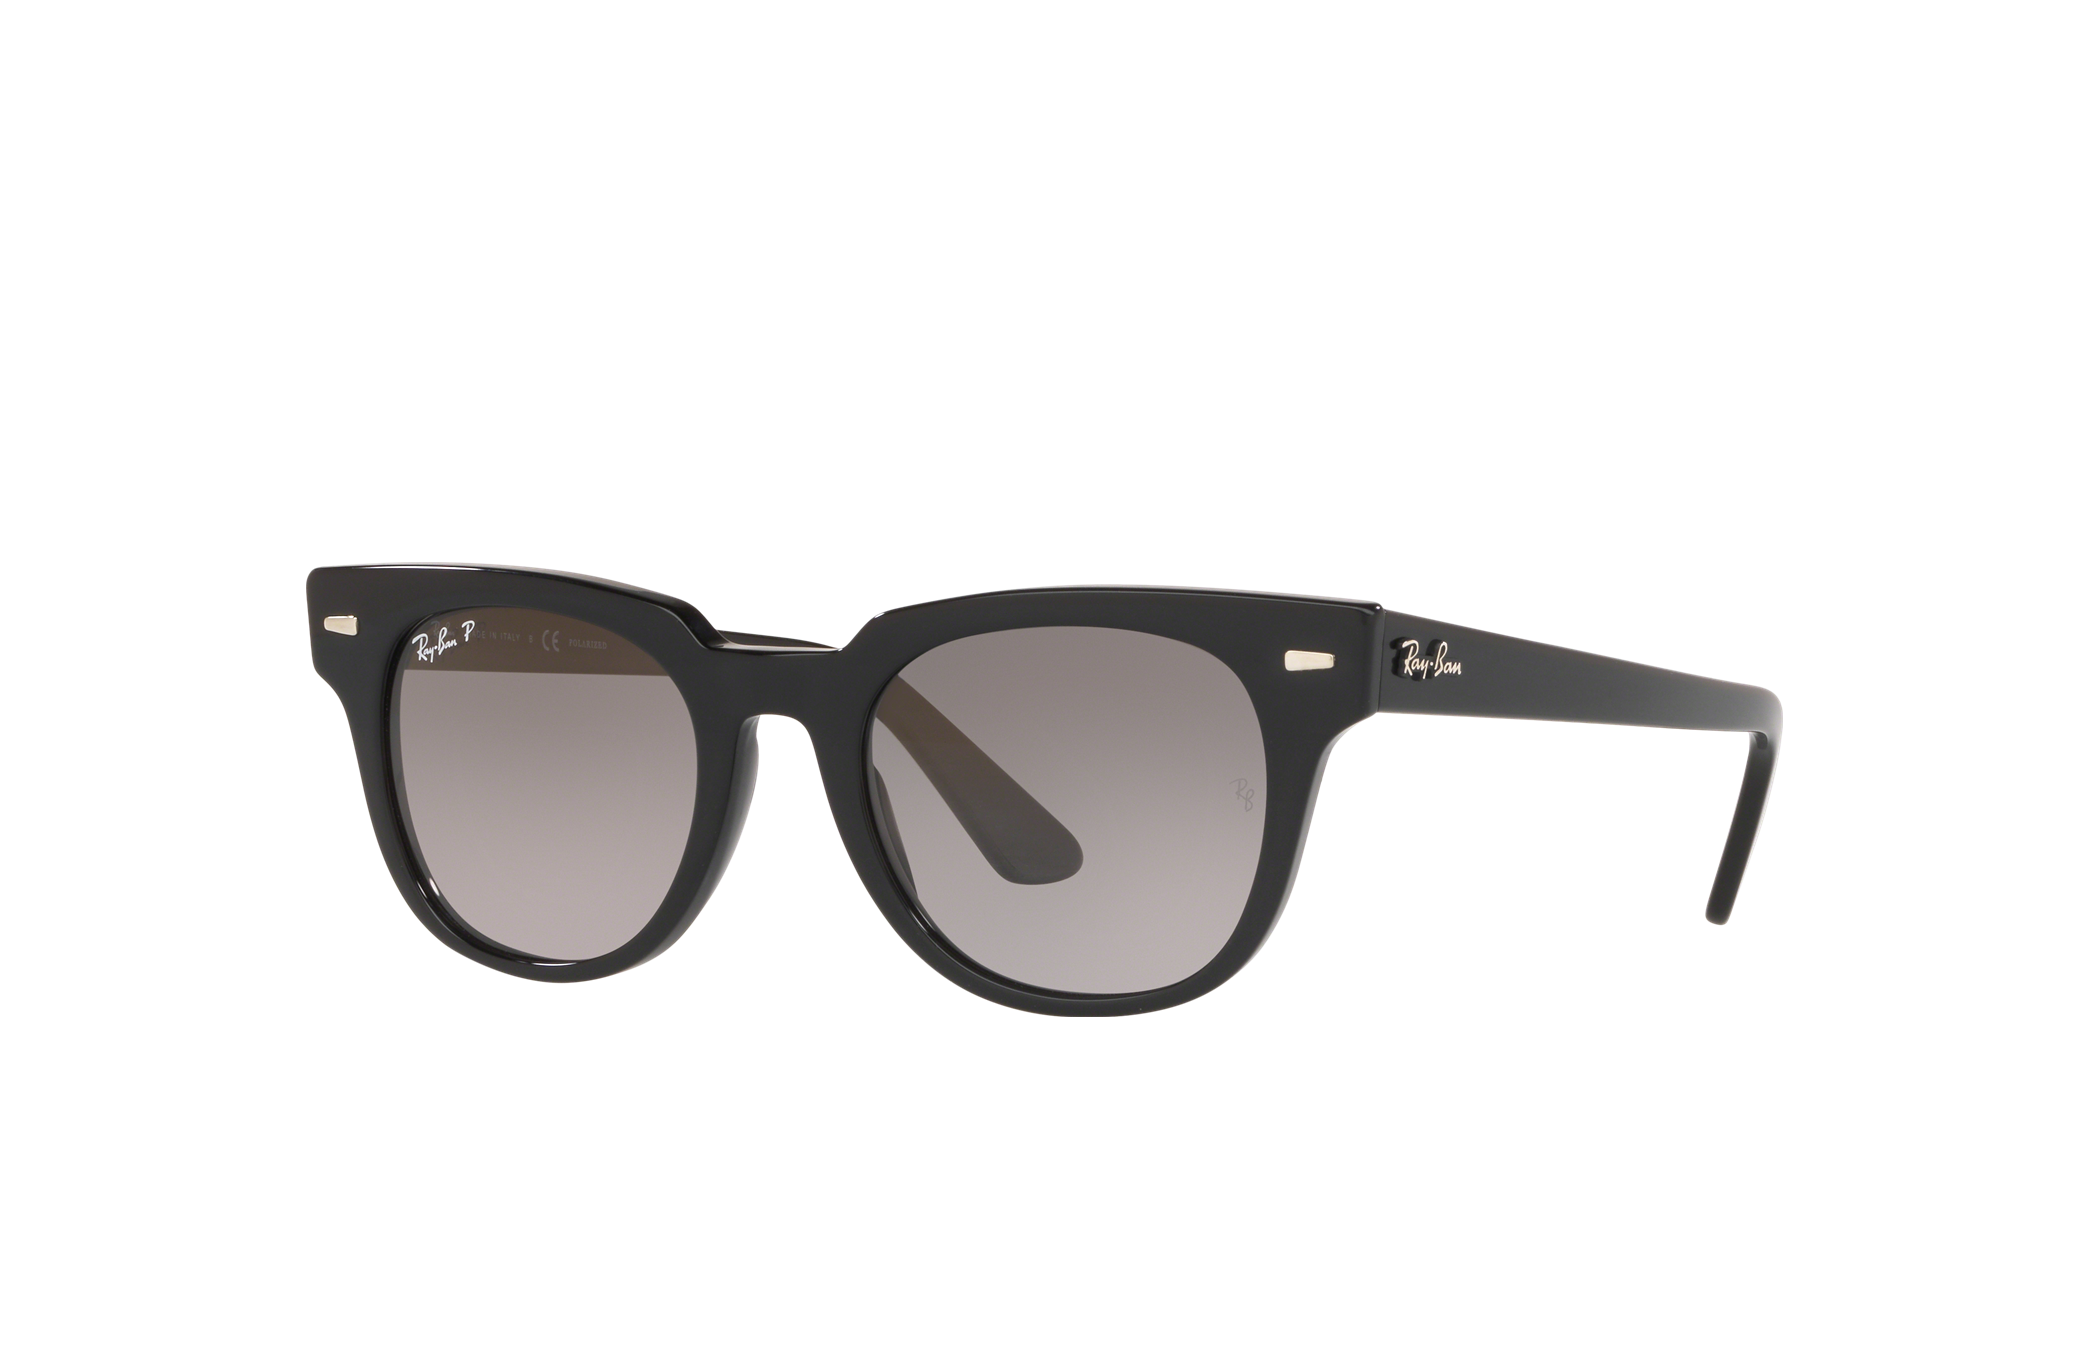 Ray Ban Meteor Sunglasses Black Frame Grey Lenses Polarized 50-20